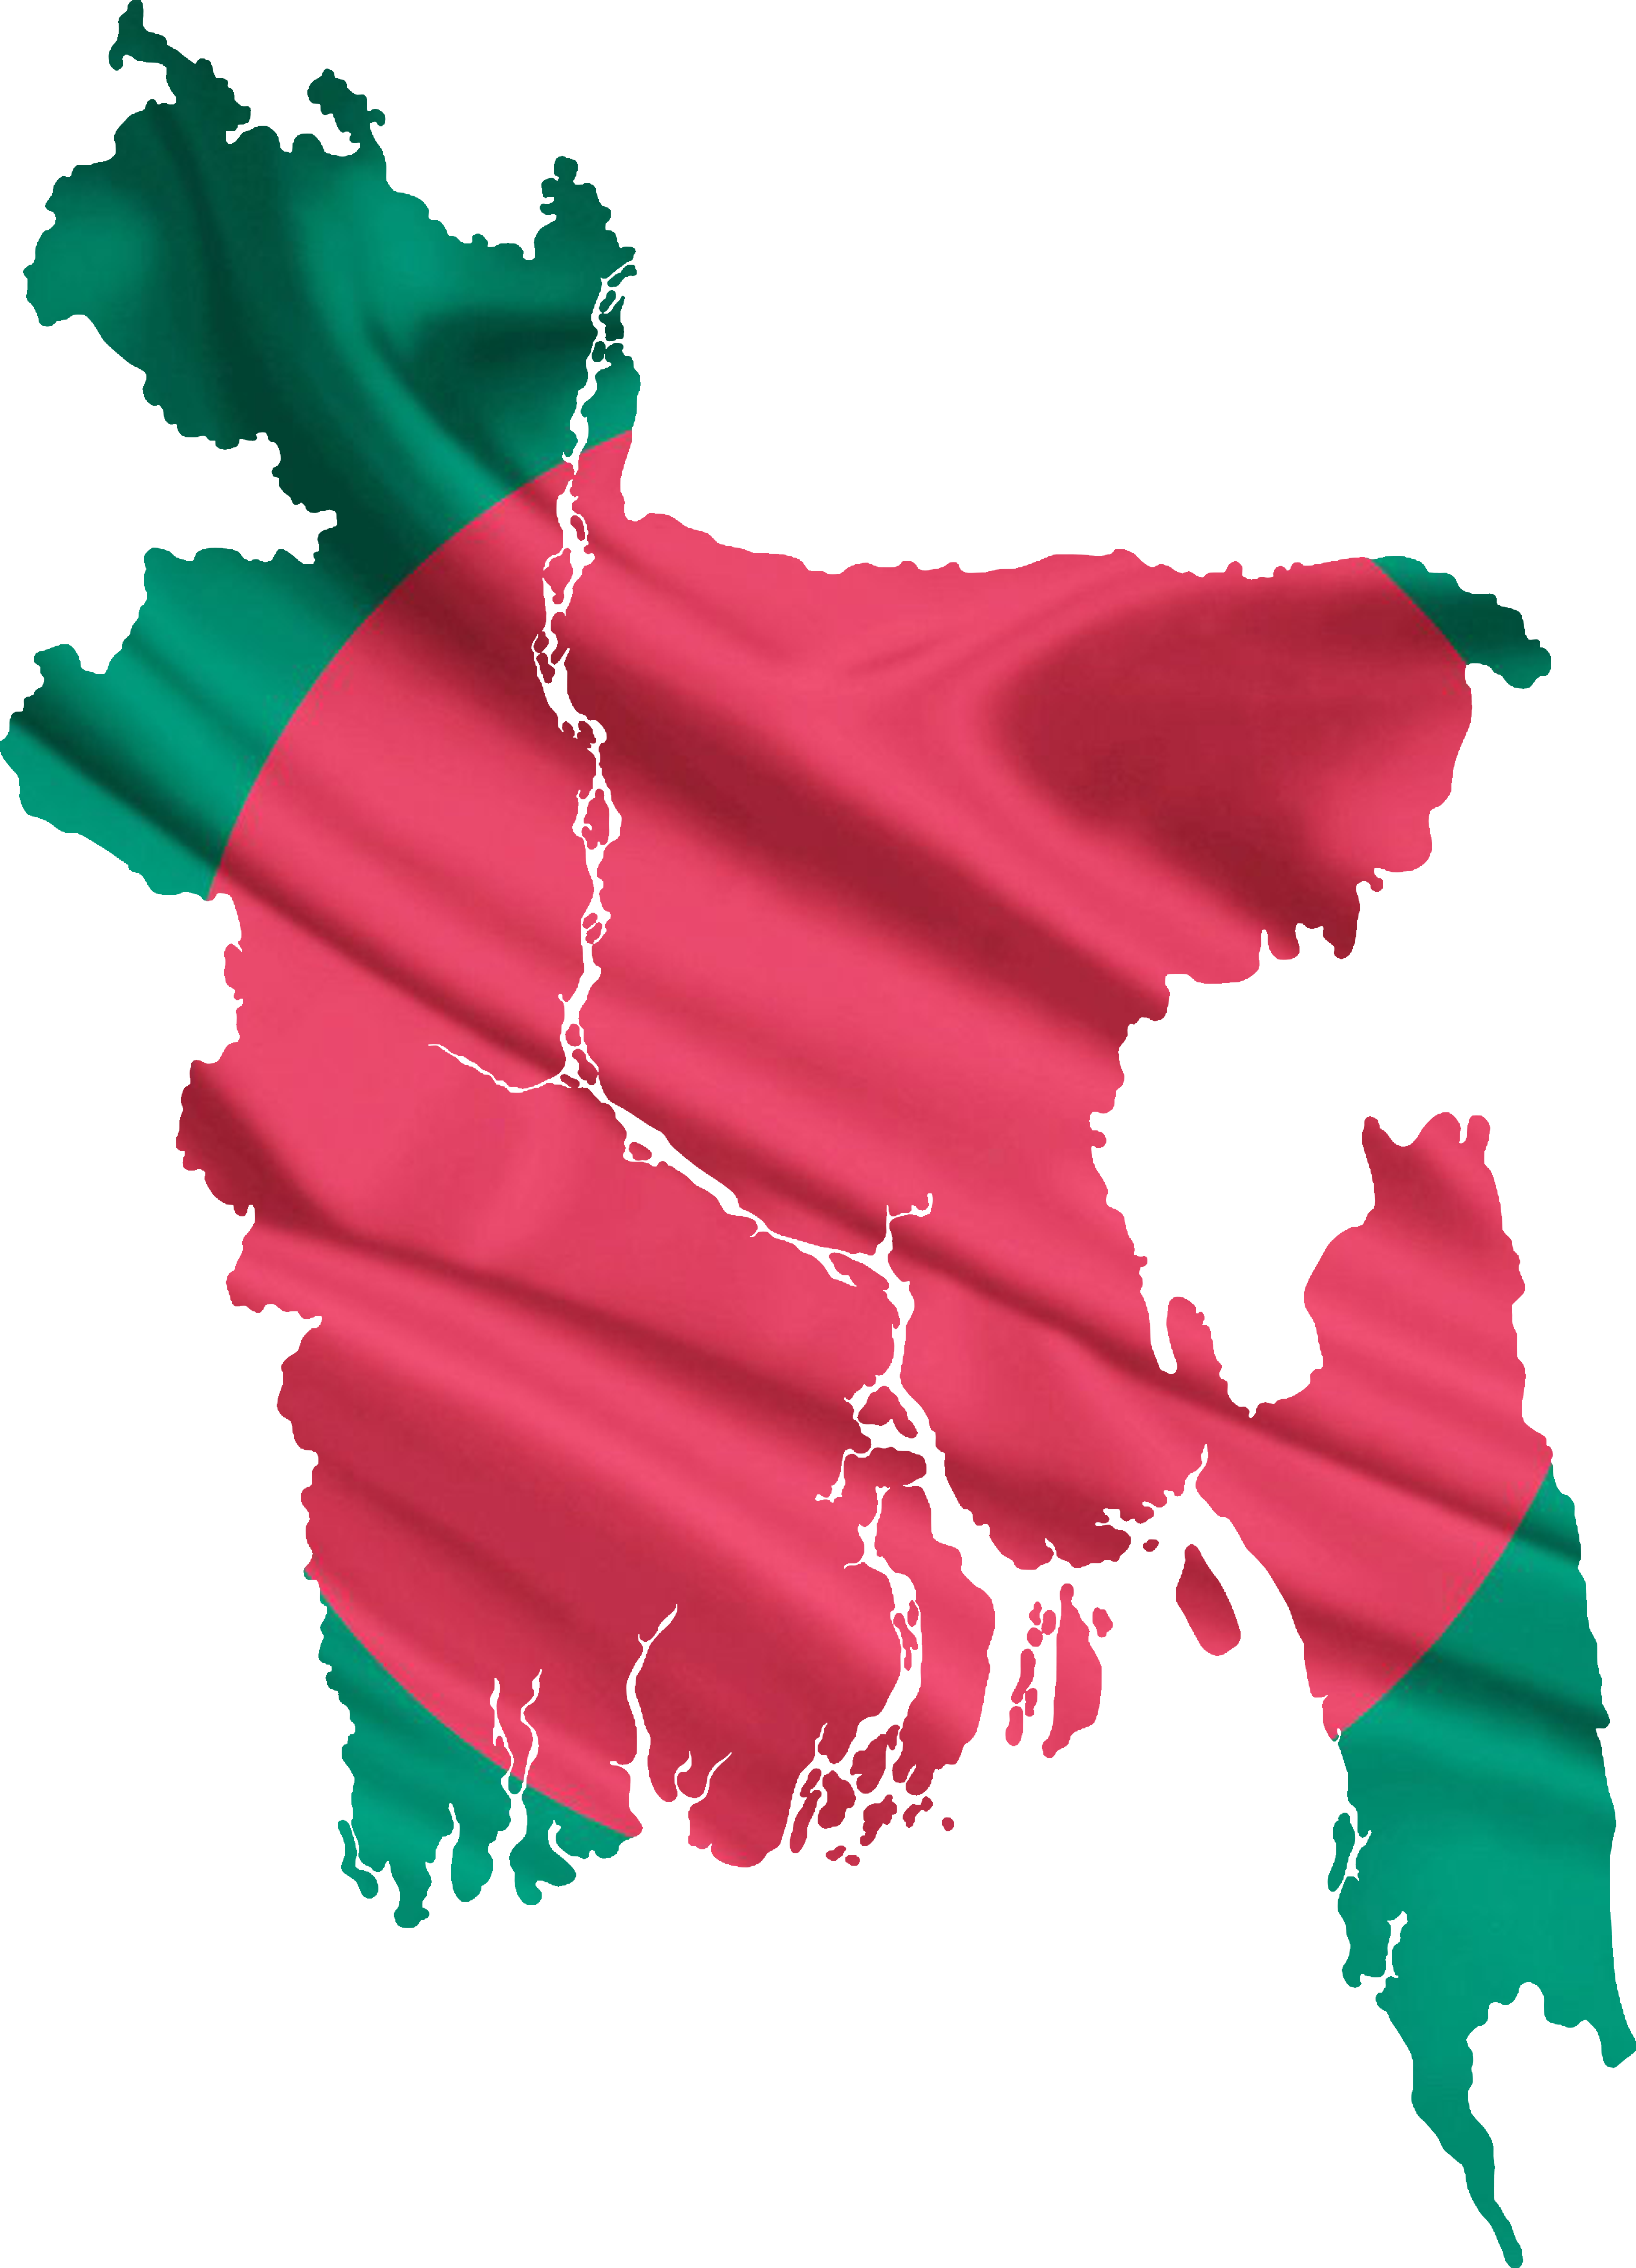 Bangladesh flag & map PNG Image